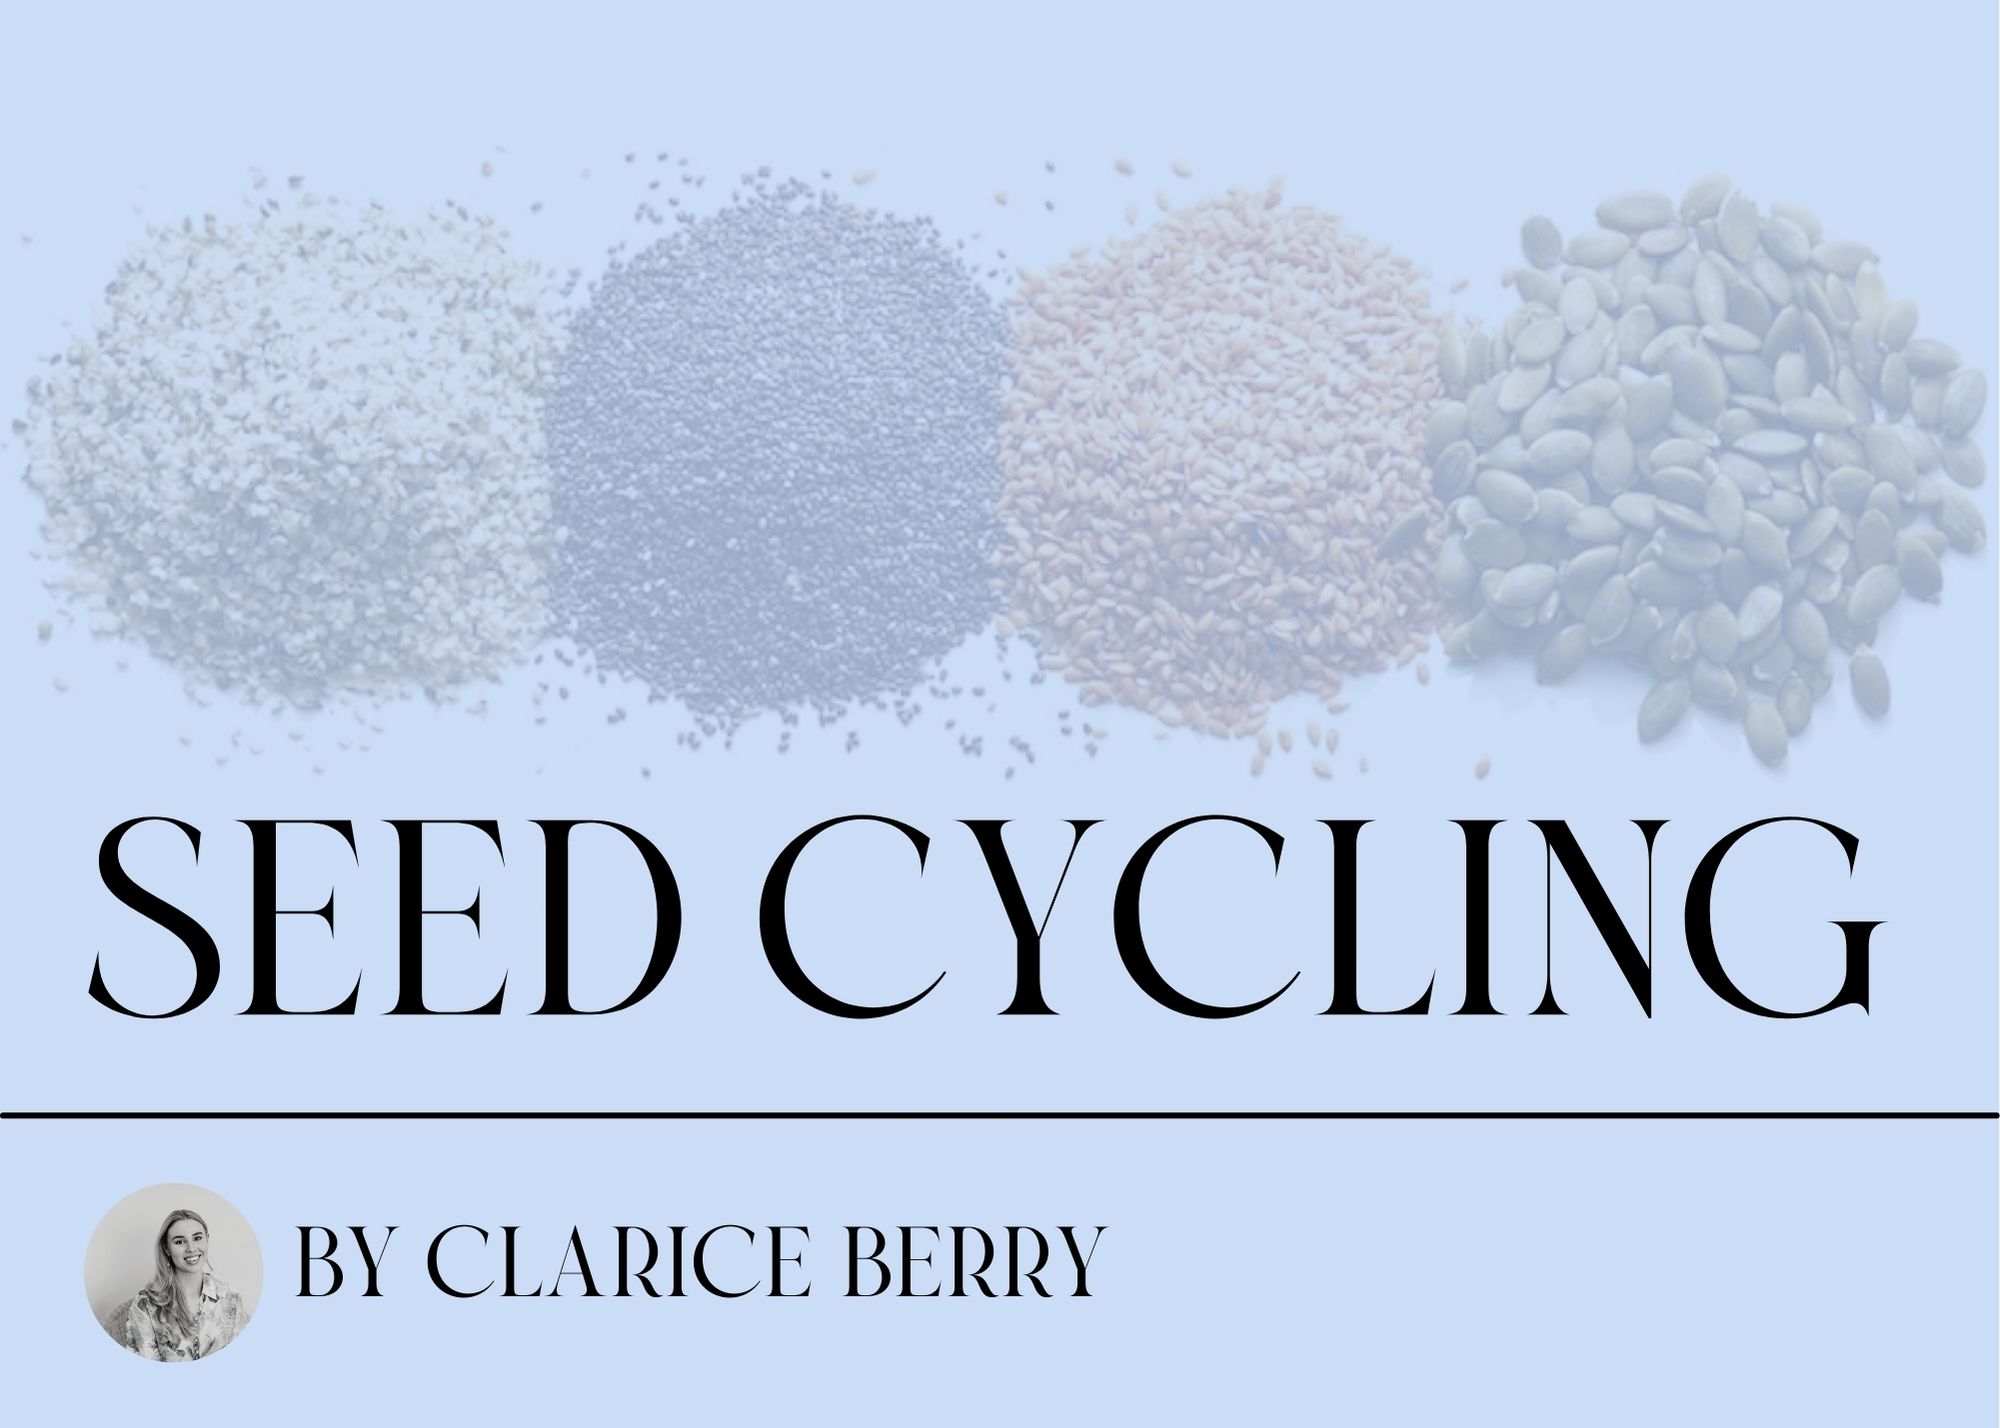 Seed Cycling